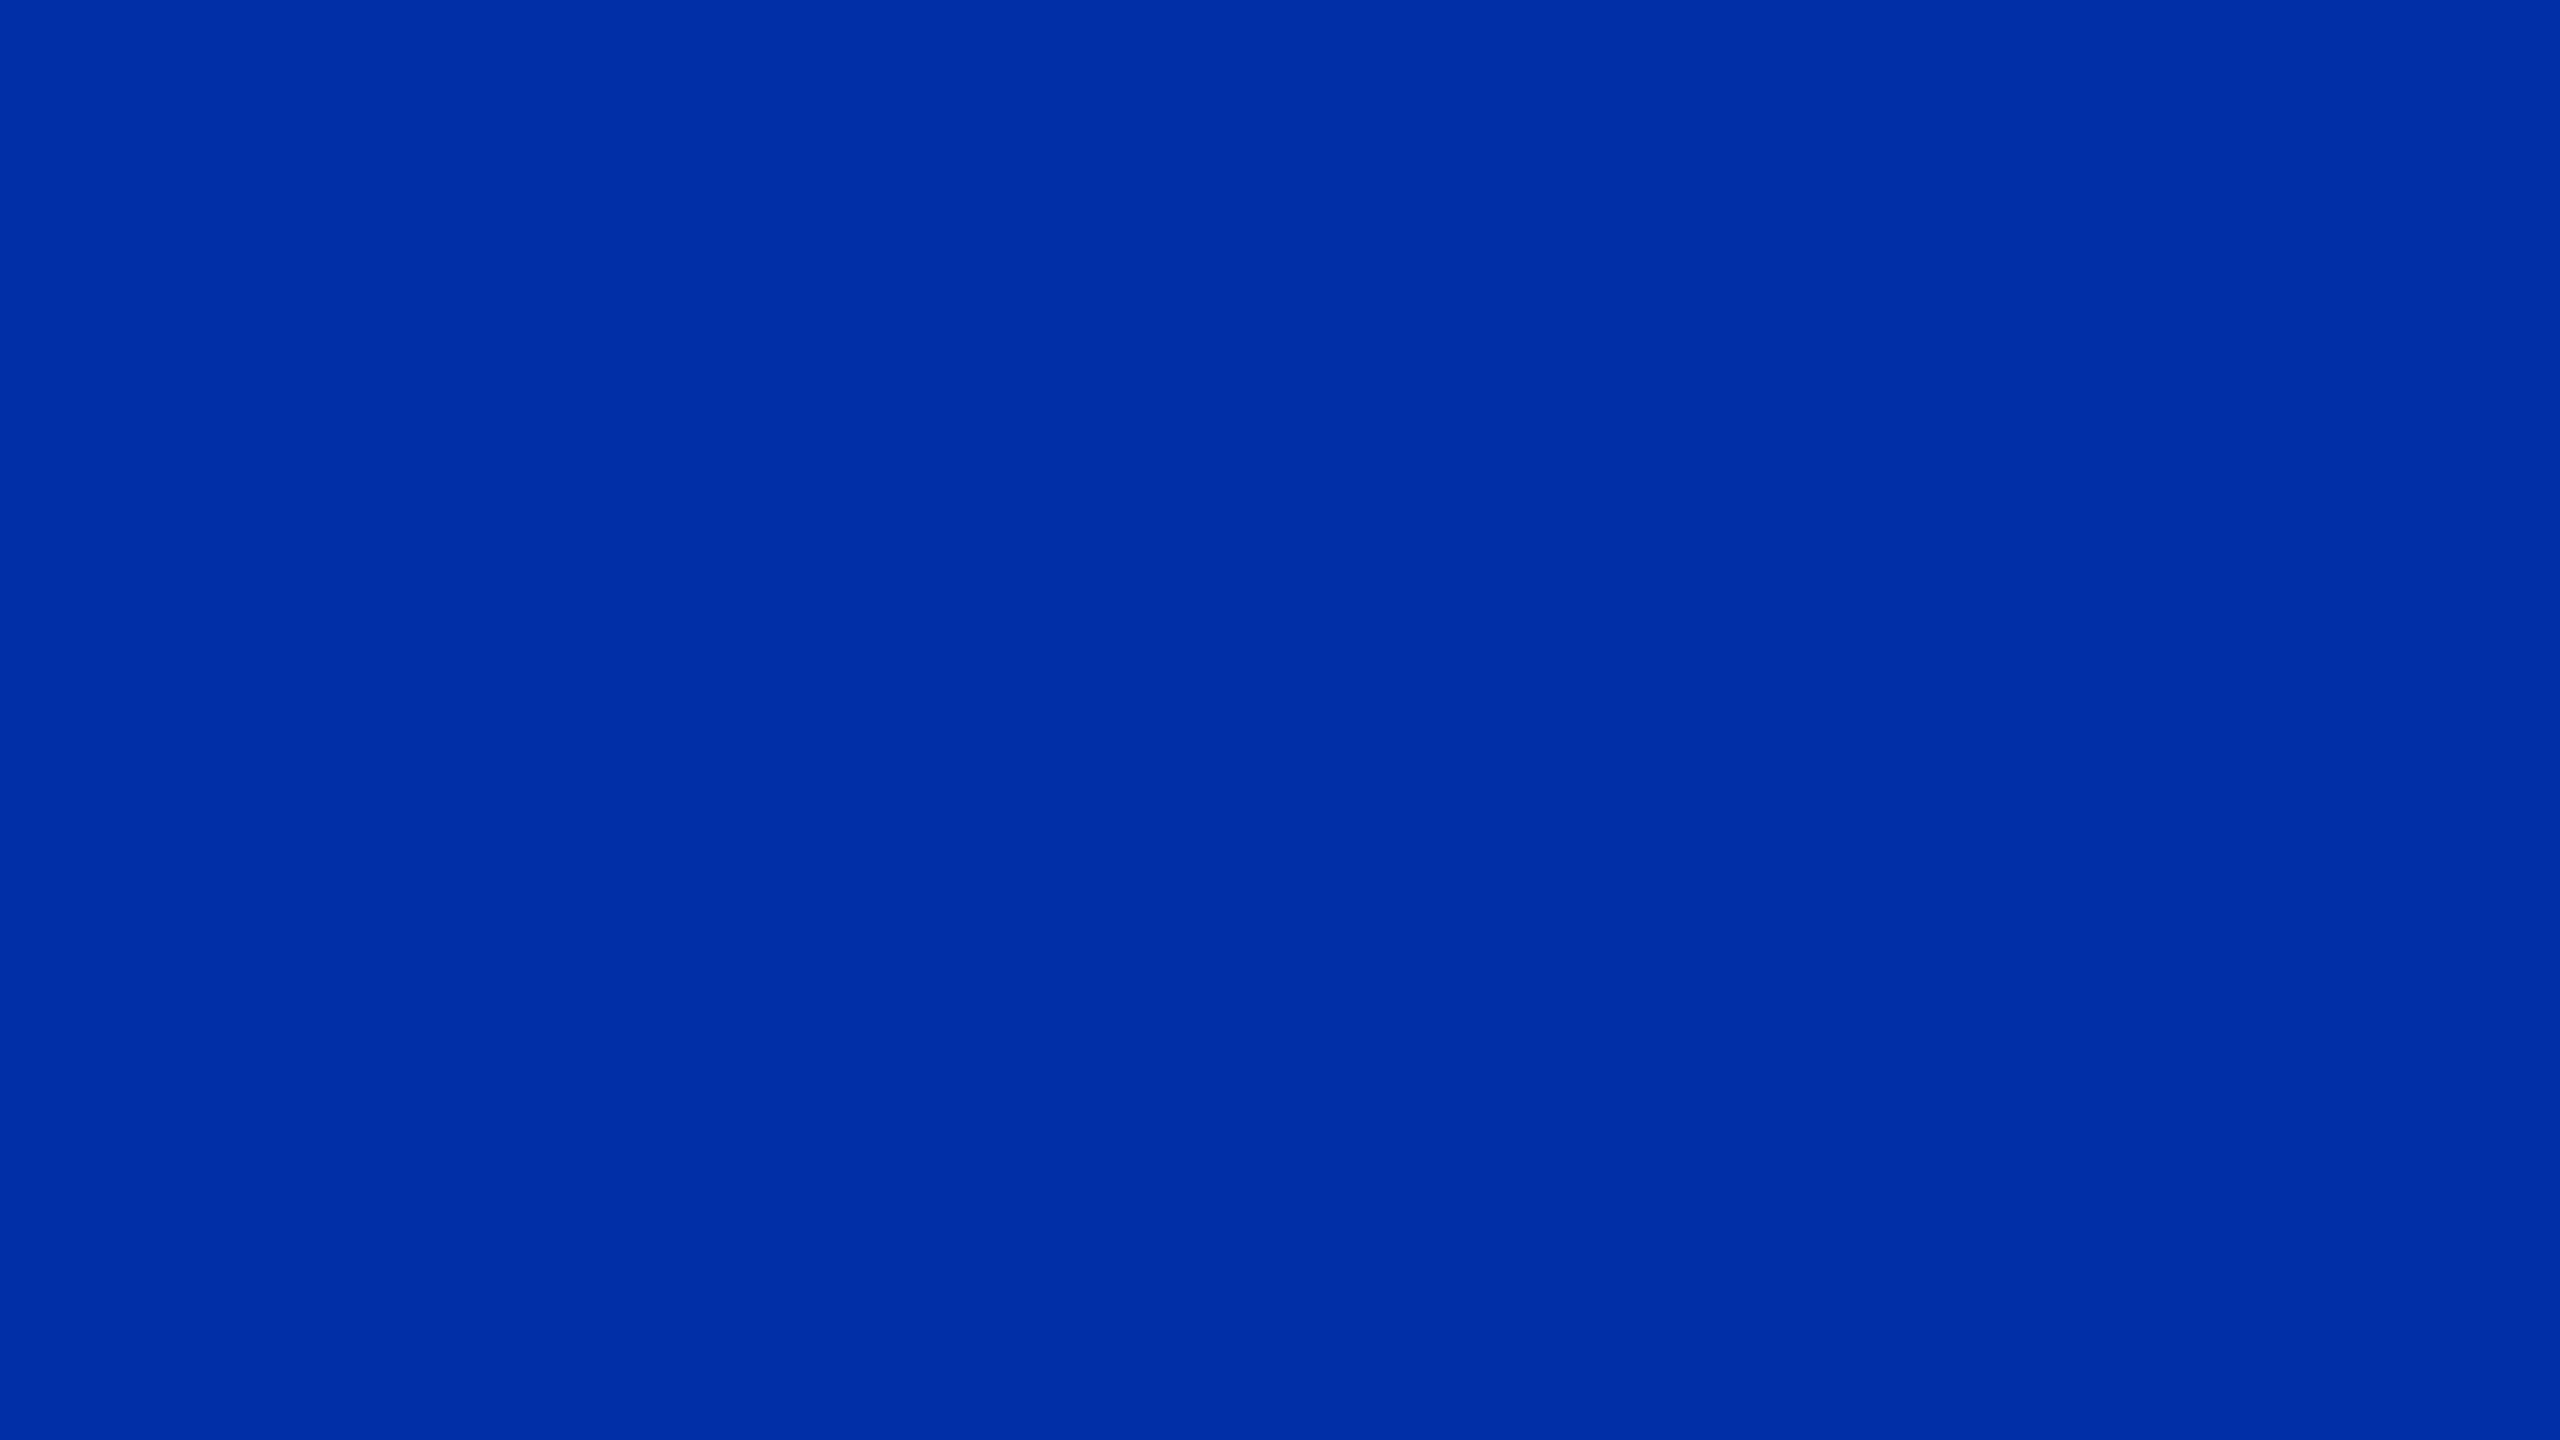 2560x1440 International Klein Blue Solid Color Background